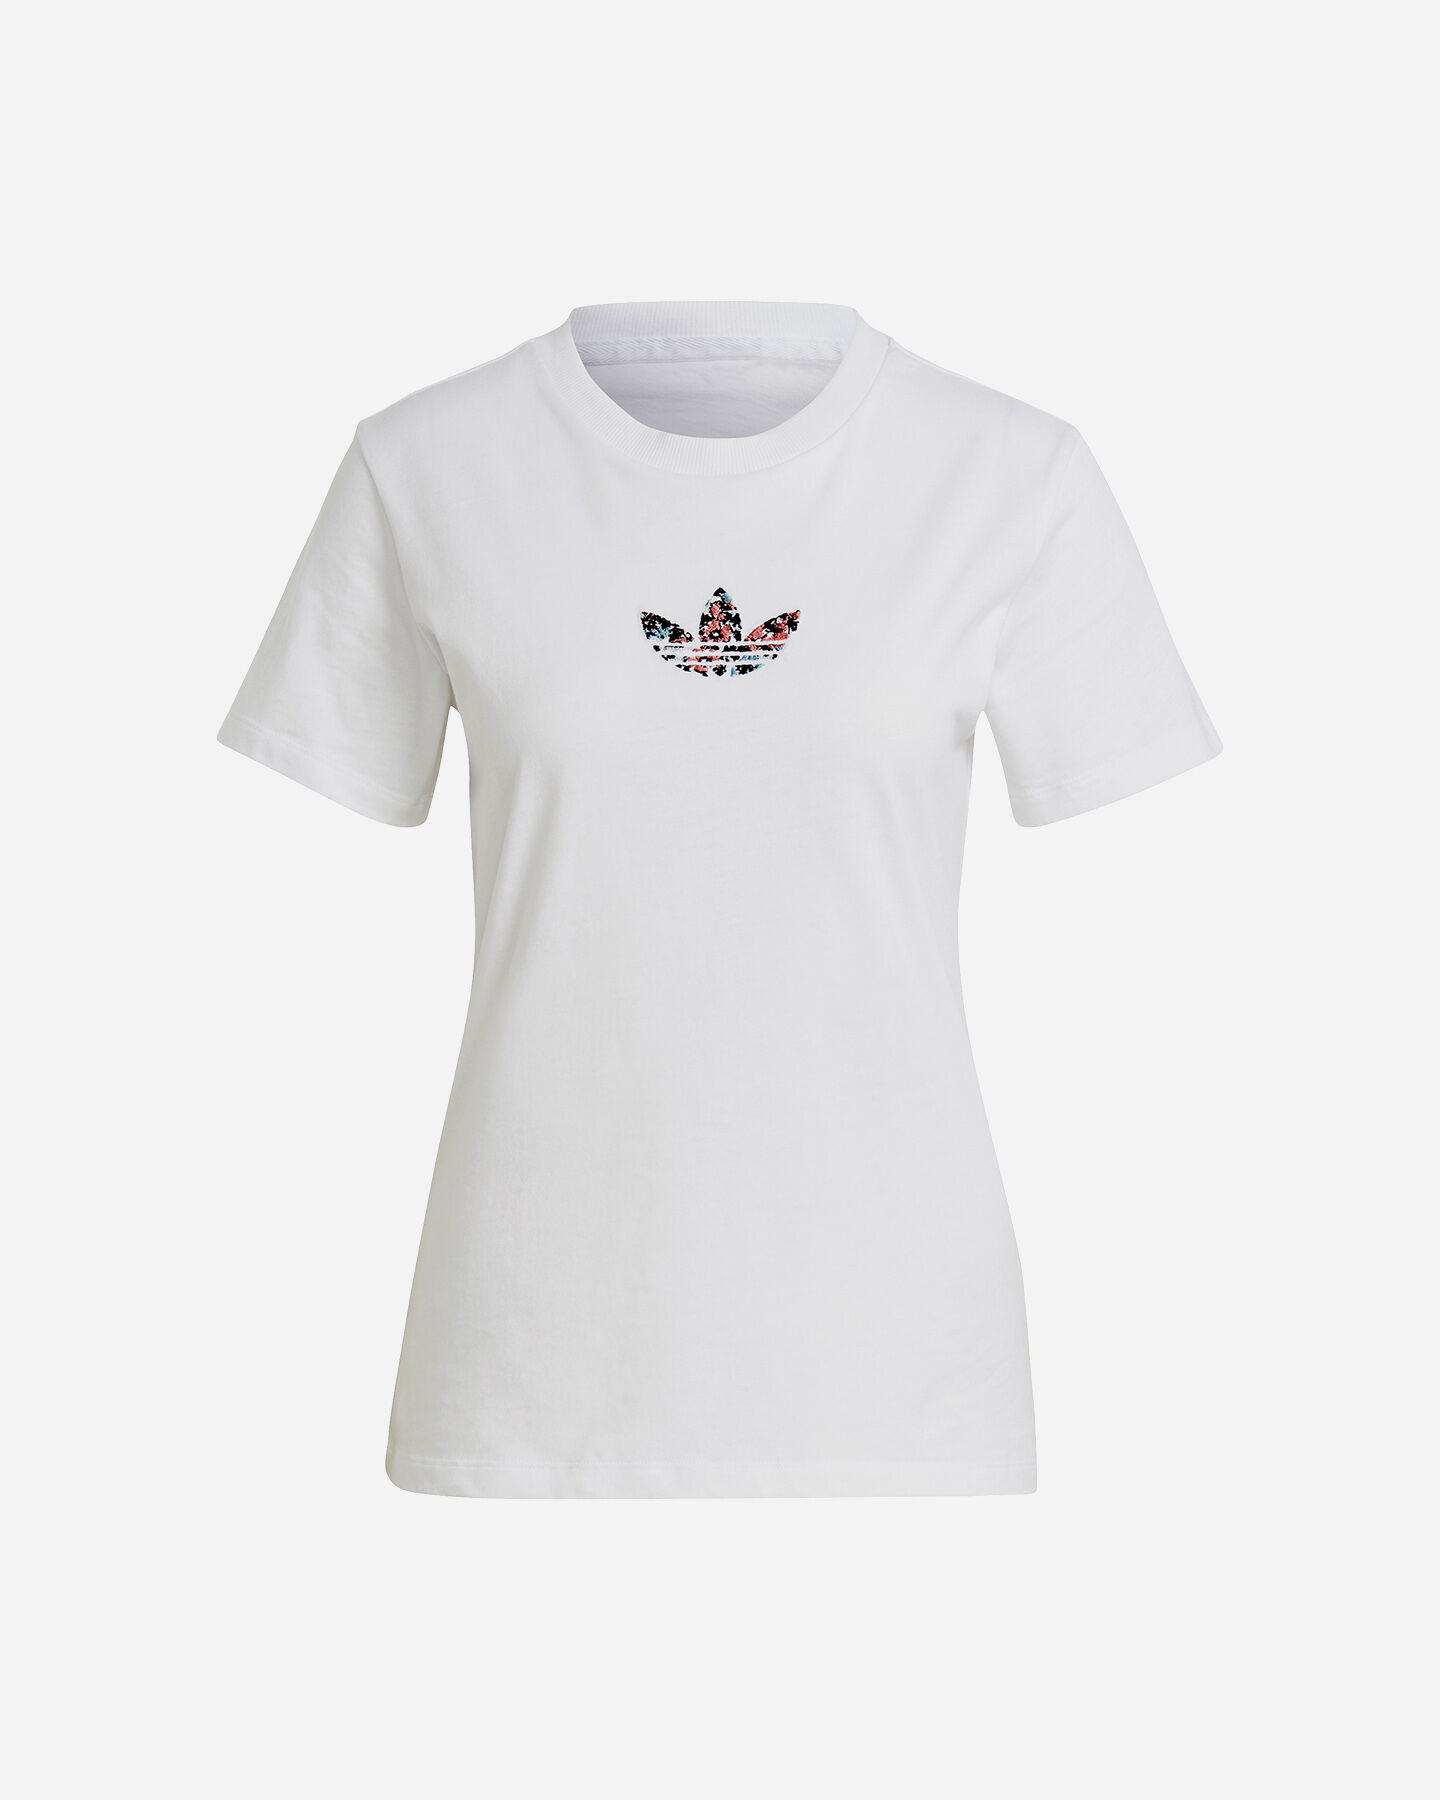  T-Shirt ADIDAS FLOWER W S5271153|UNI|36 scatto 0